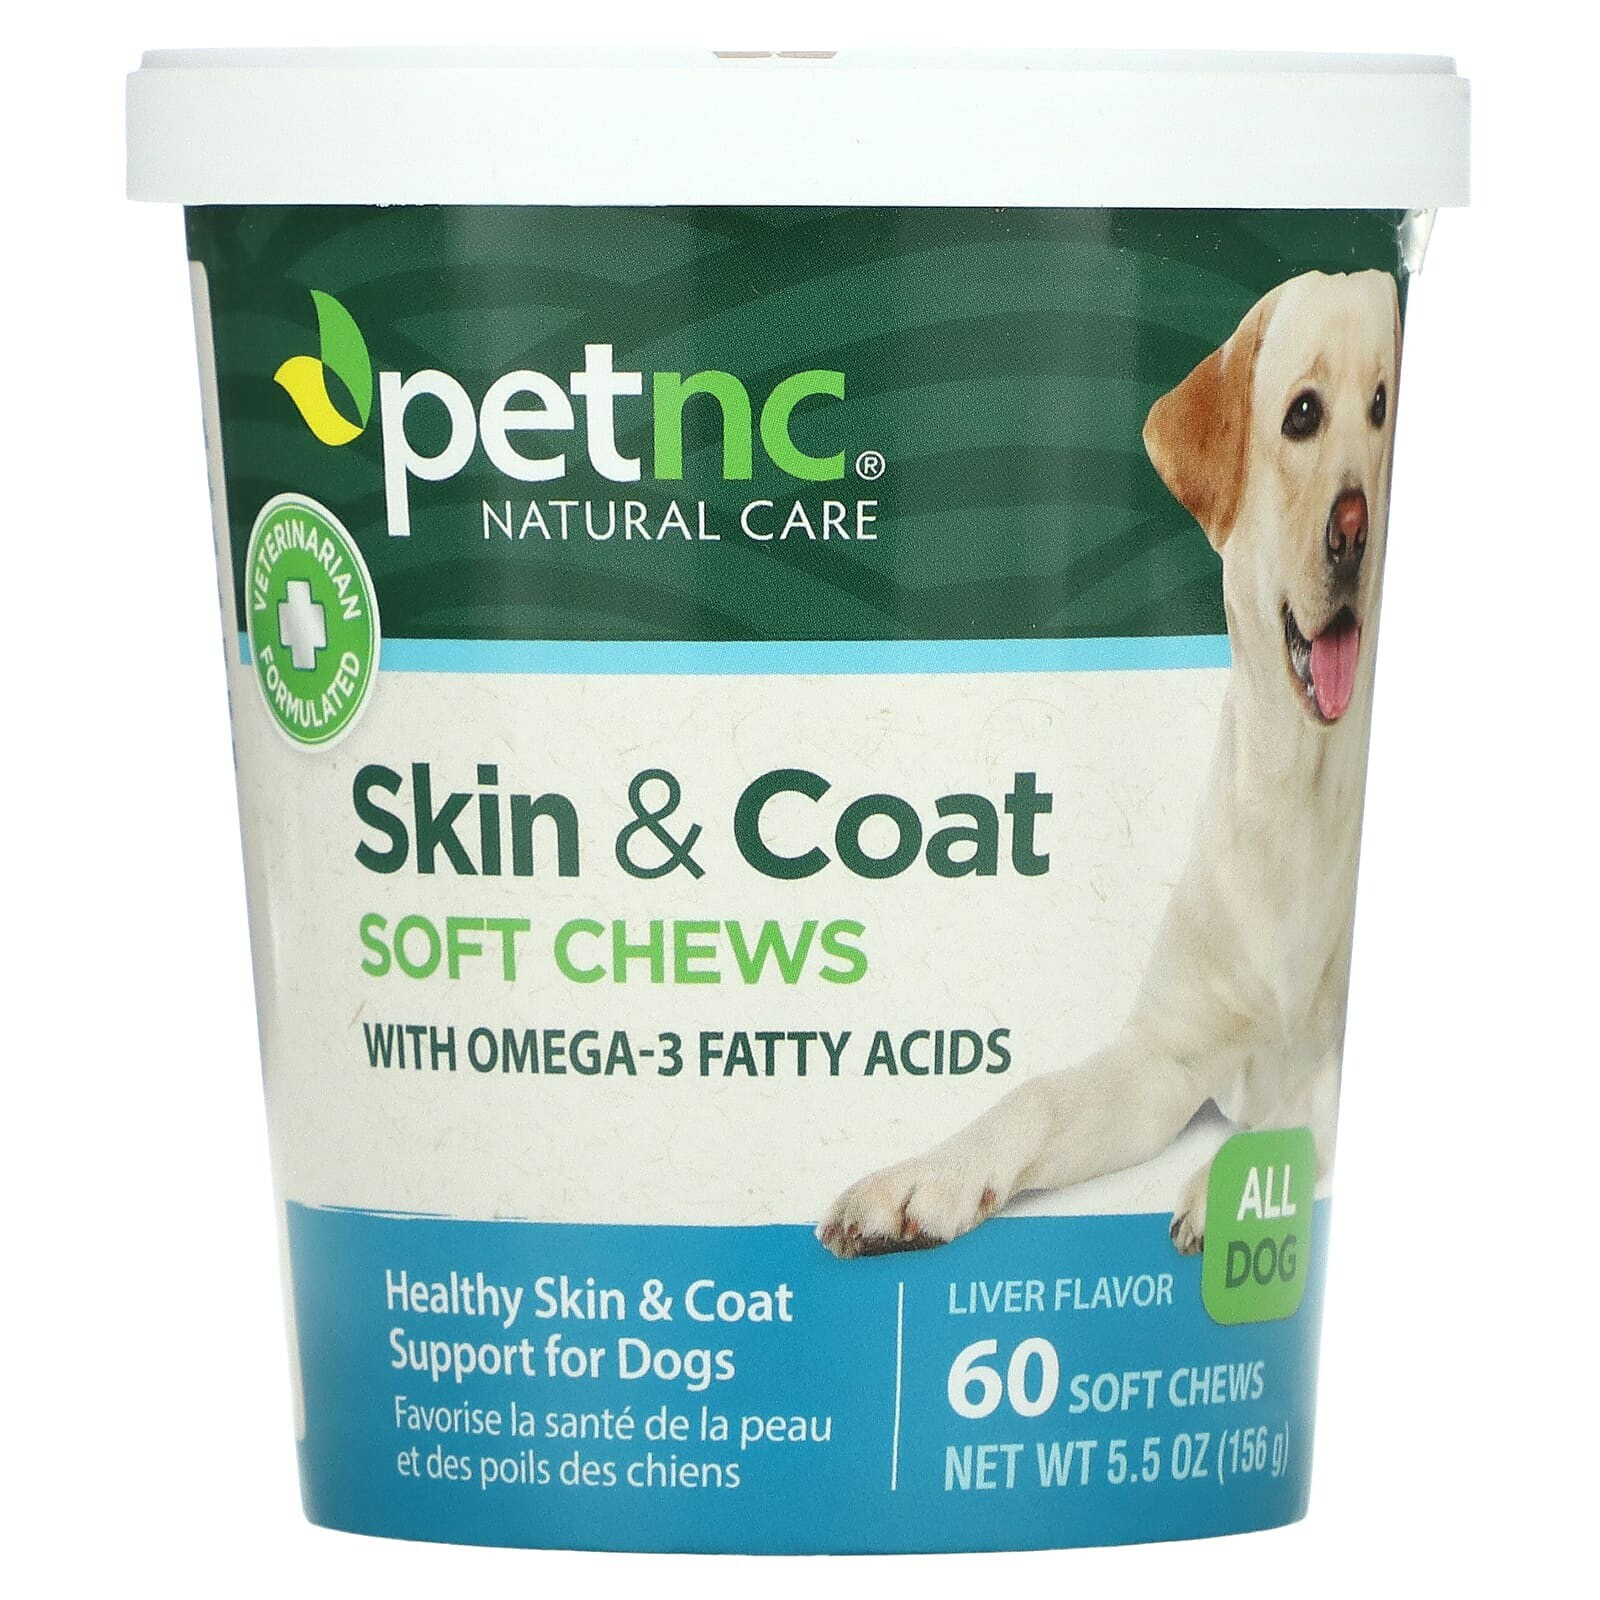 petnc NATURAL CARE, Skin & Coat, All Dog, Liver, 60 Soft Chews, 5.5 oz (156 g)